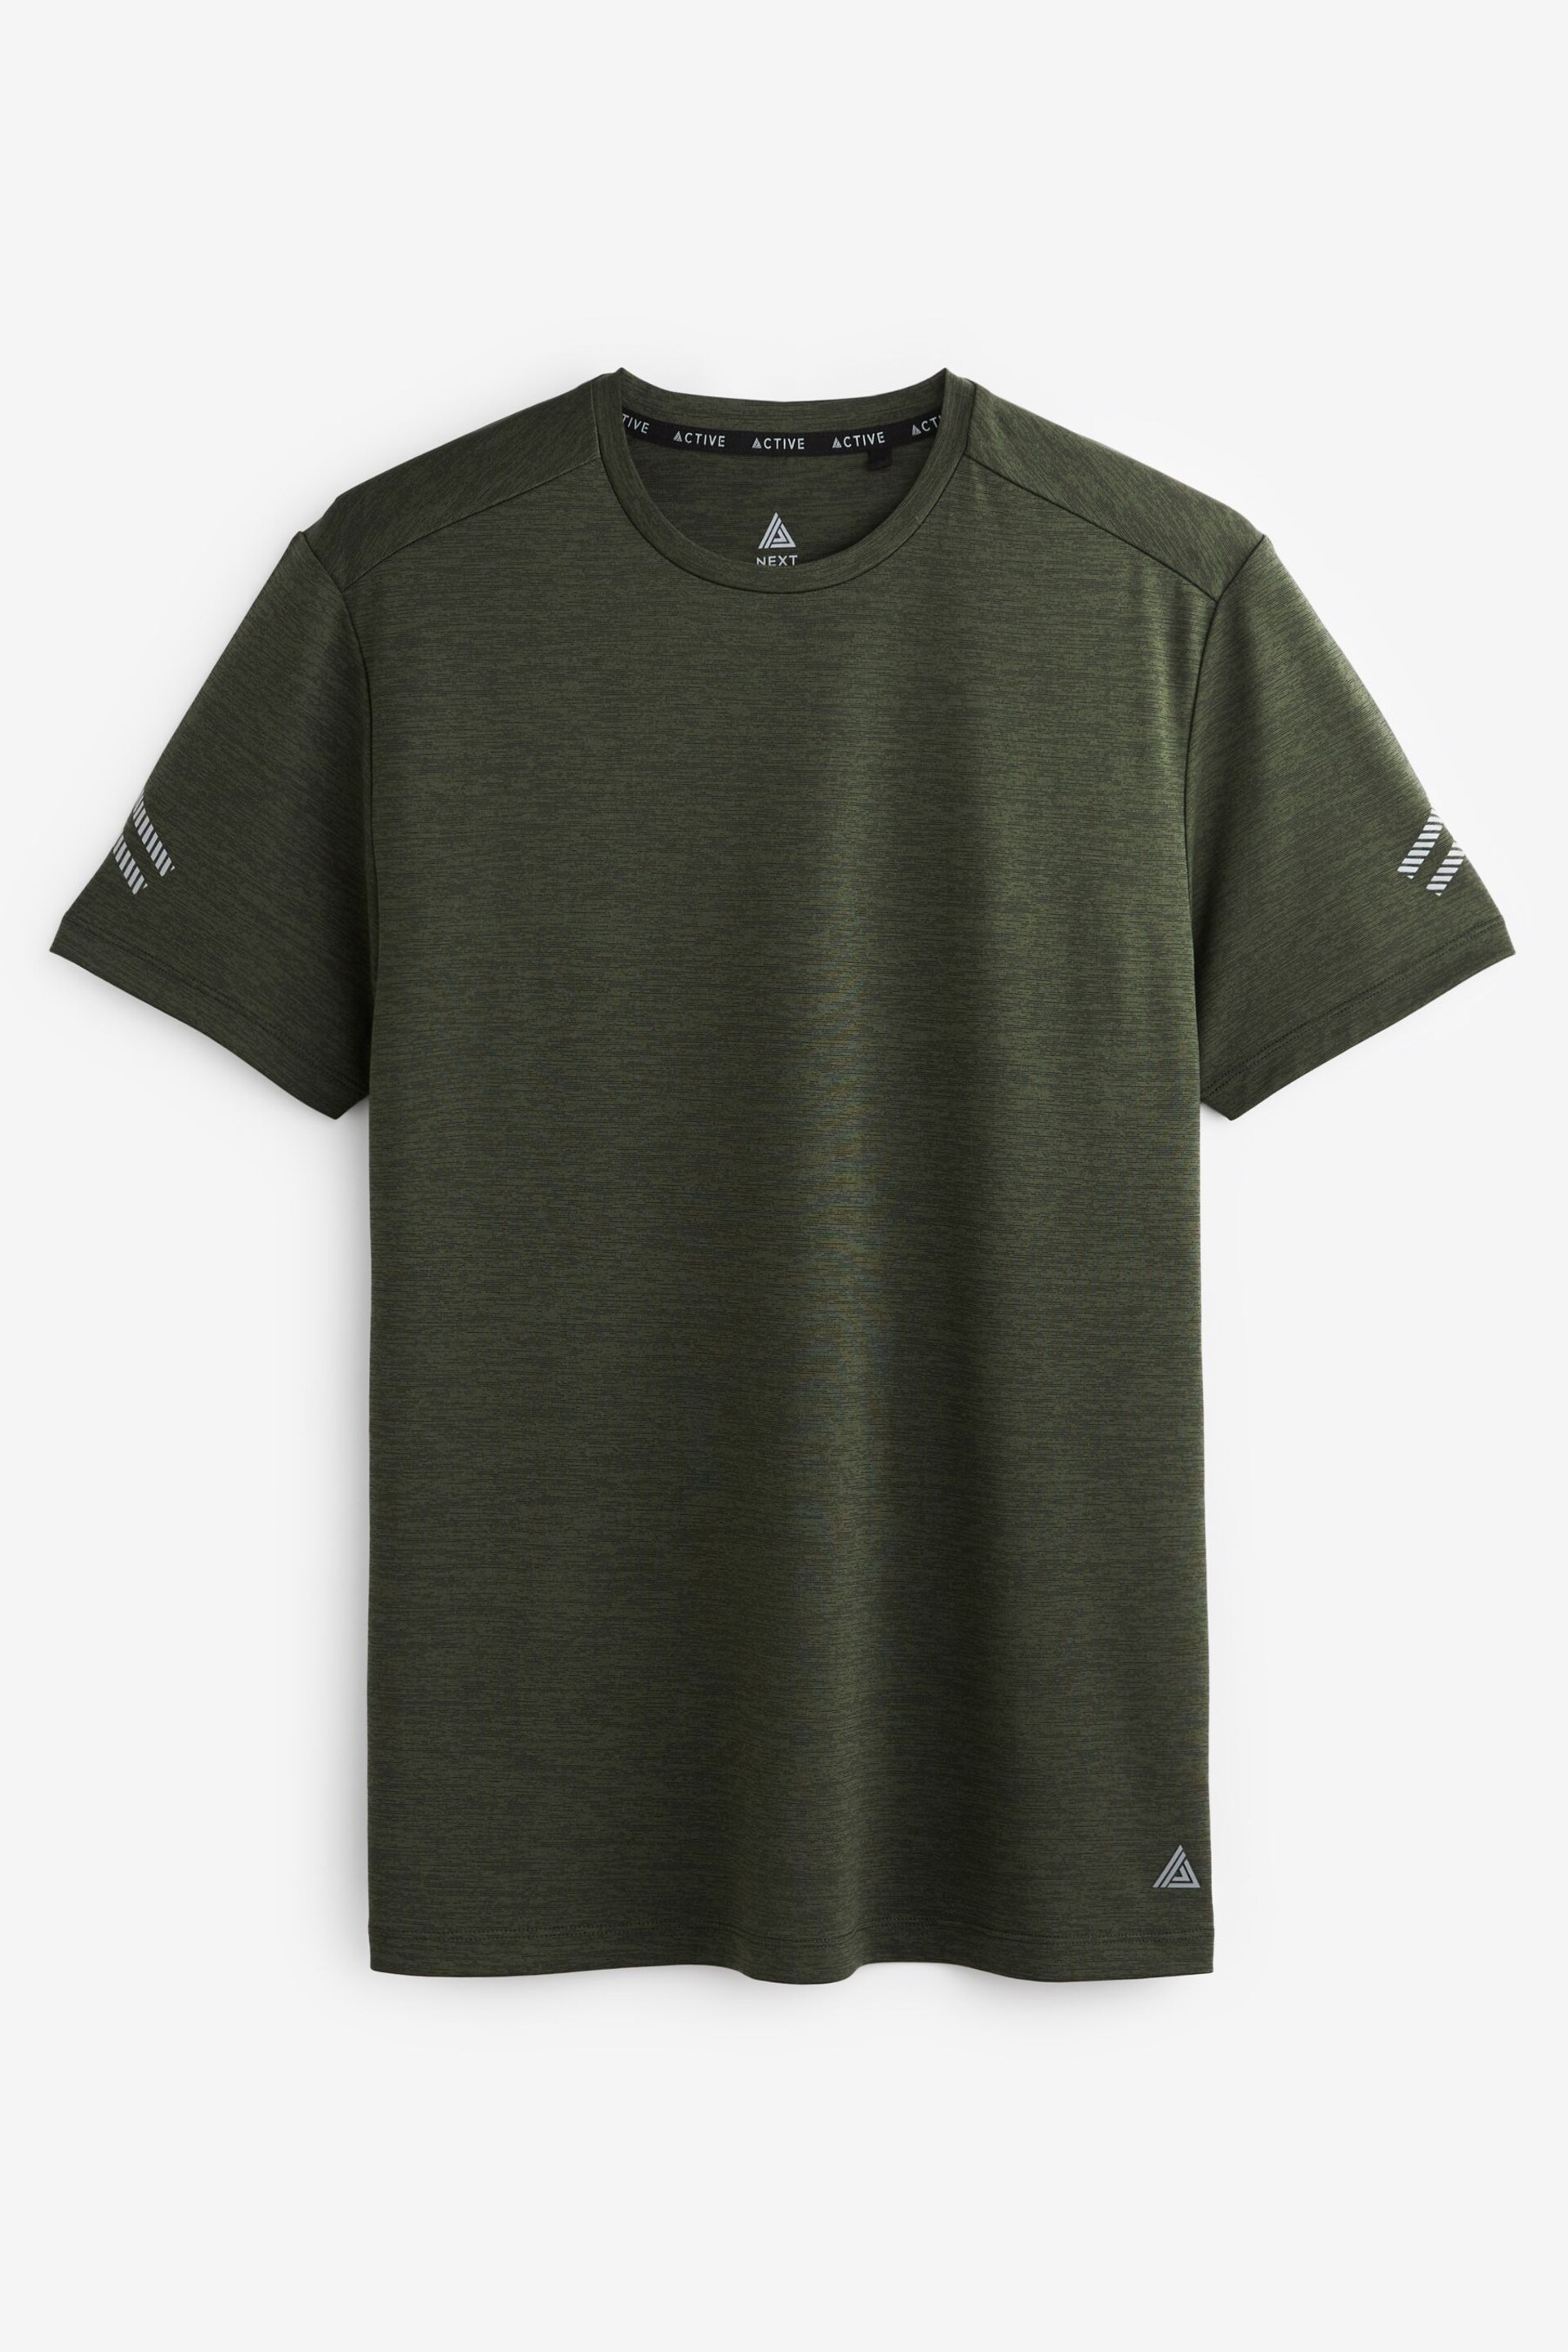 Khaki Green Active Gym & Training T-Shirt - Image 7 of 7